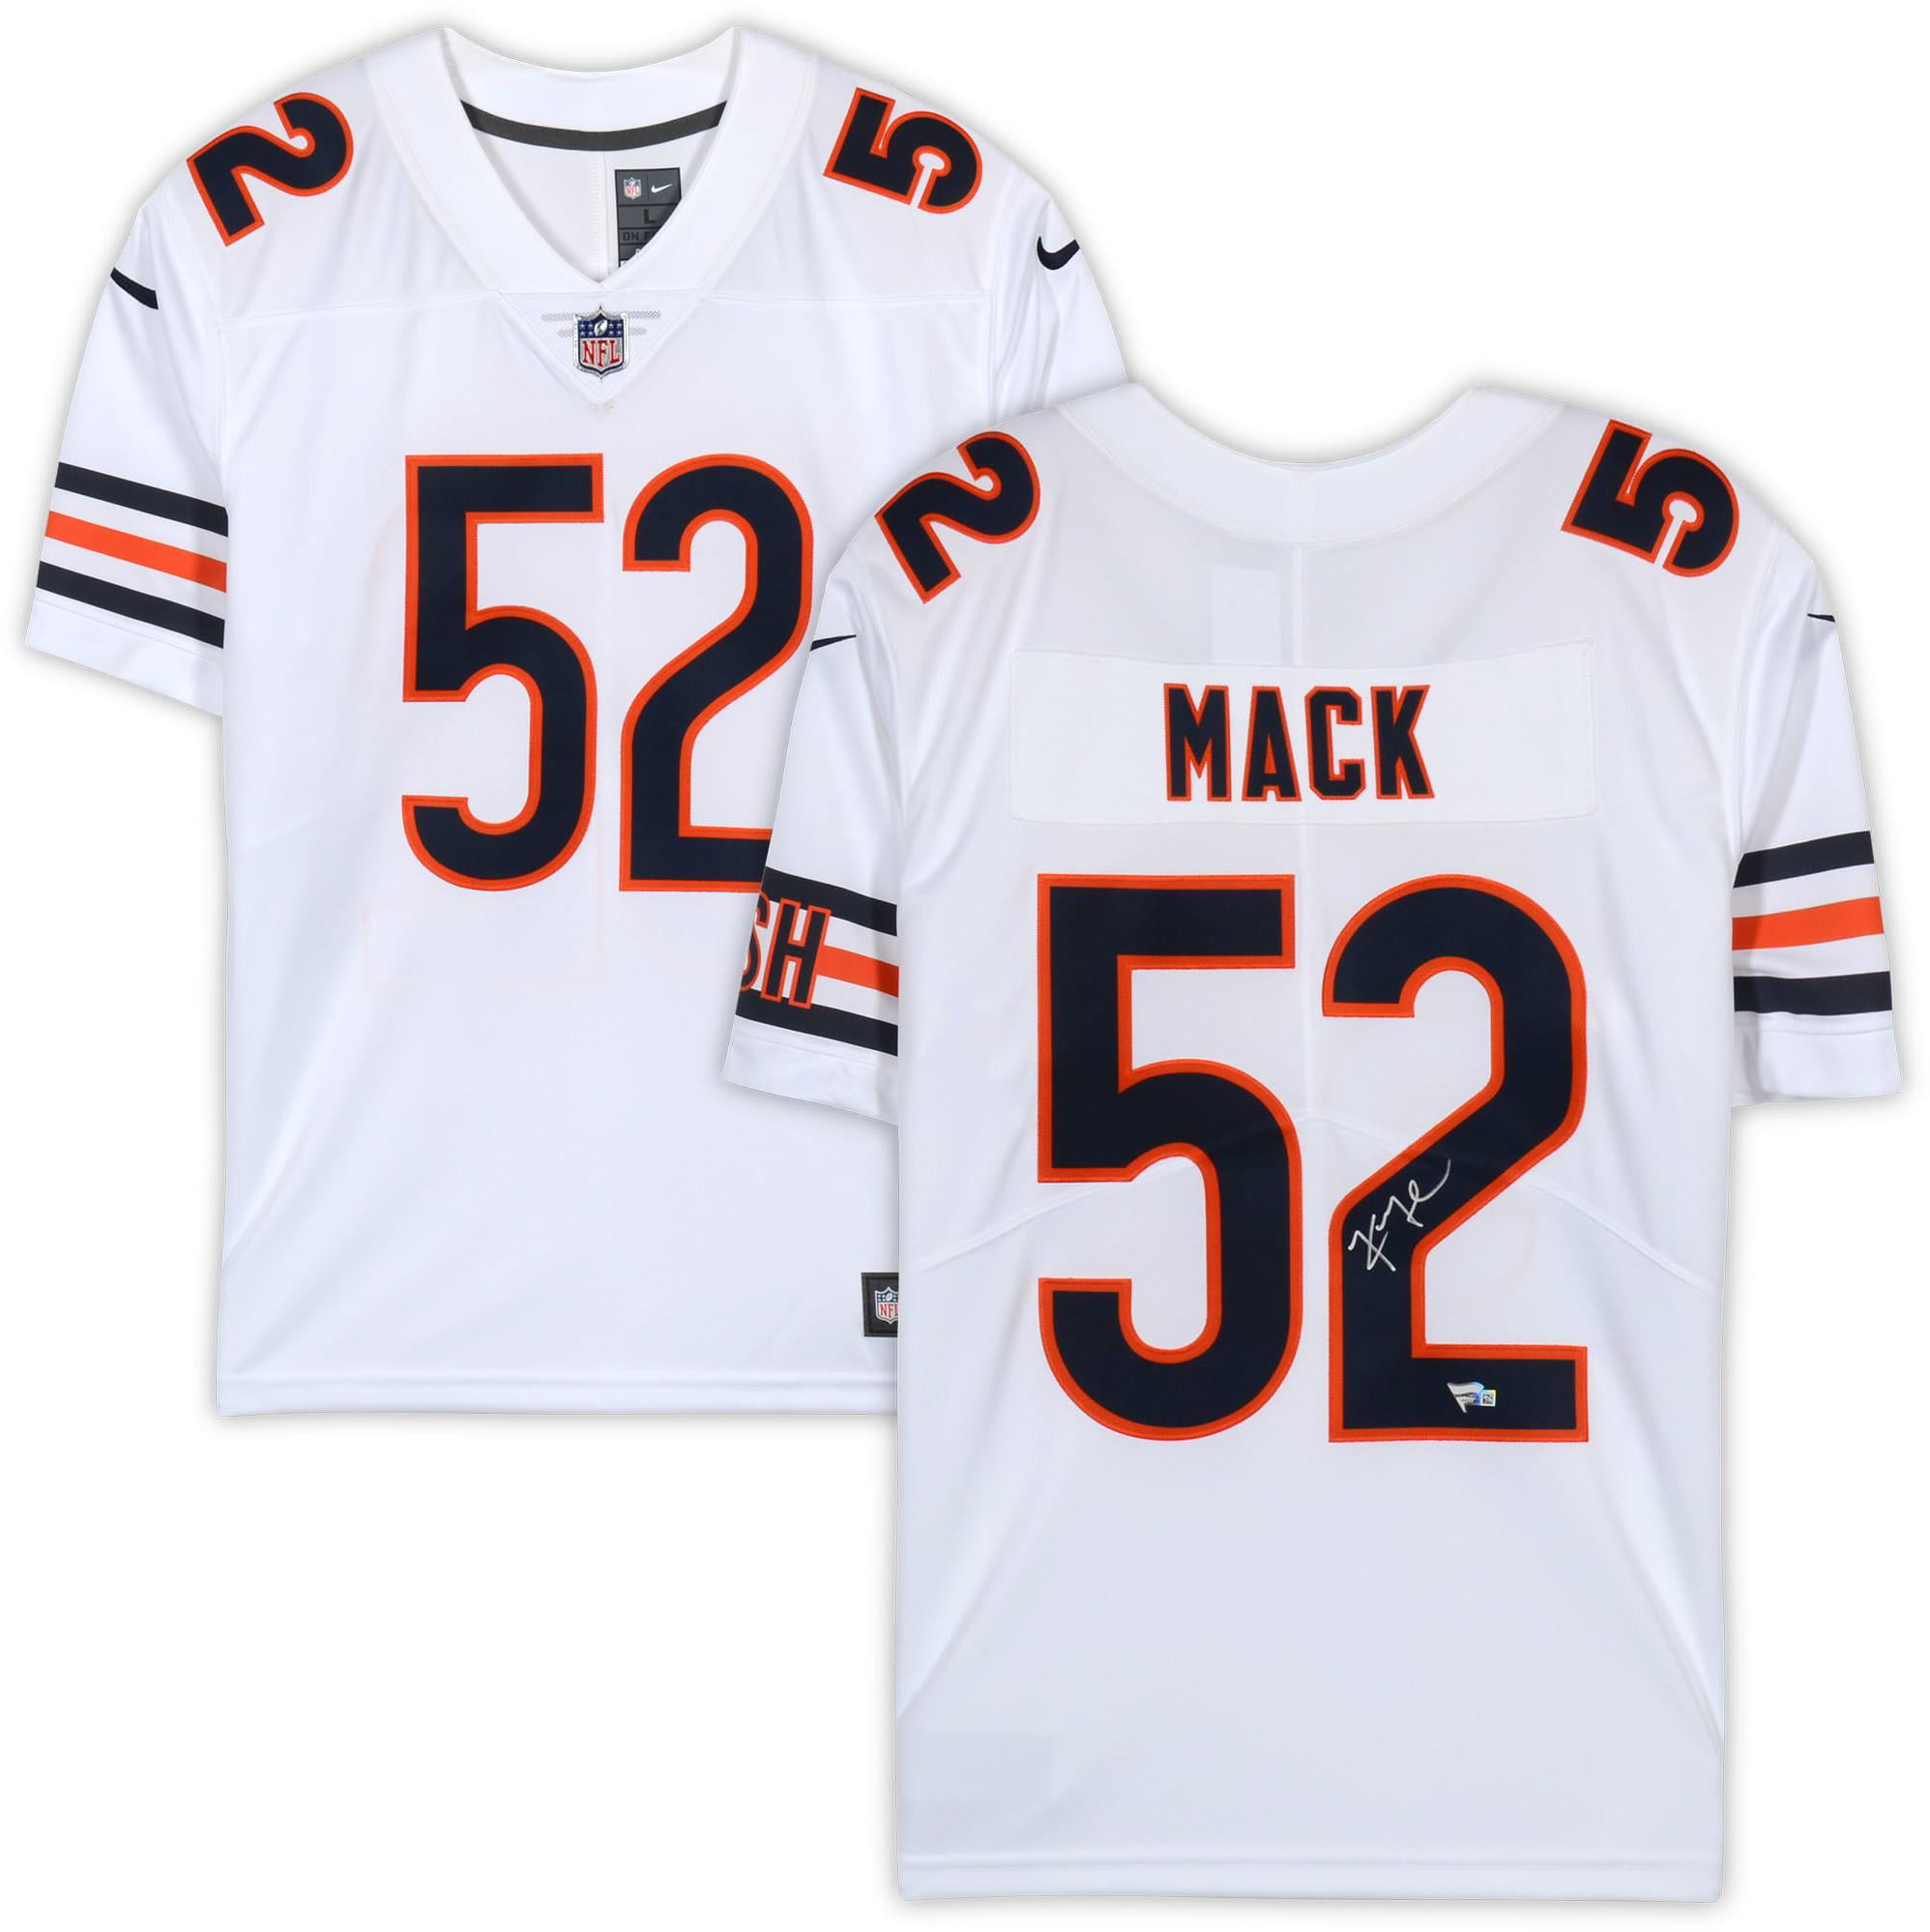 khalil mack authentic bears jersey